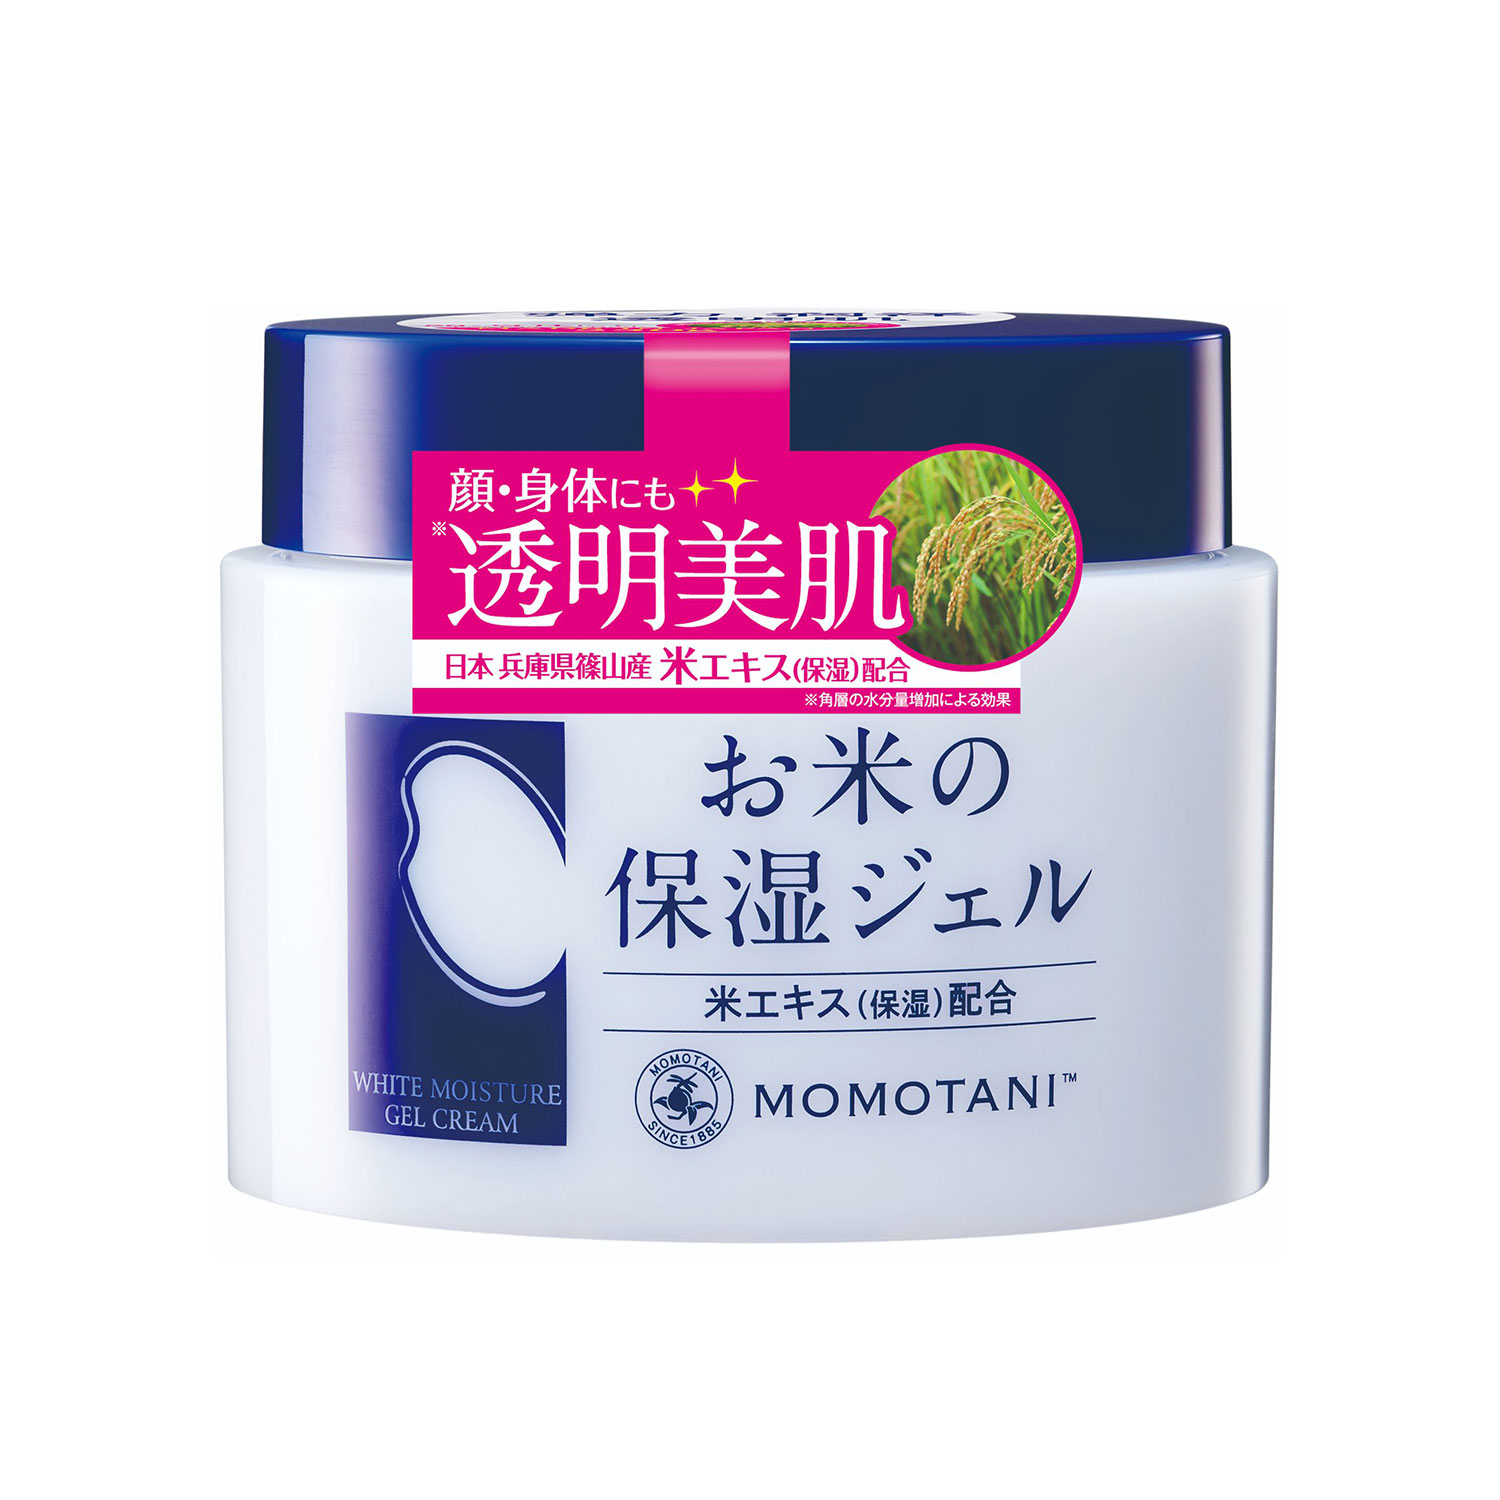 White Moisture Gel Cream Momotani 230g